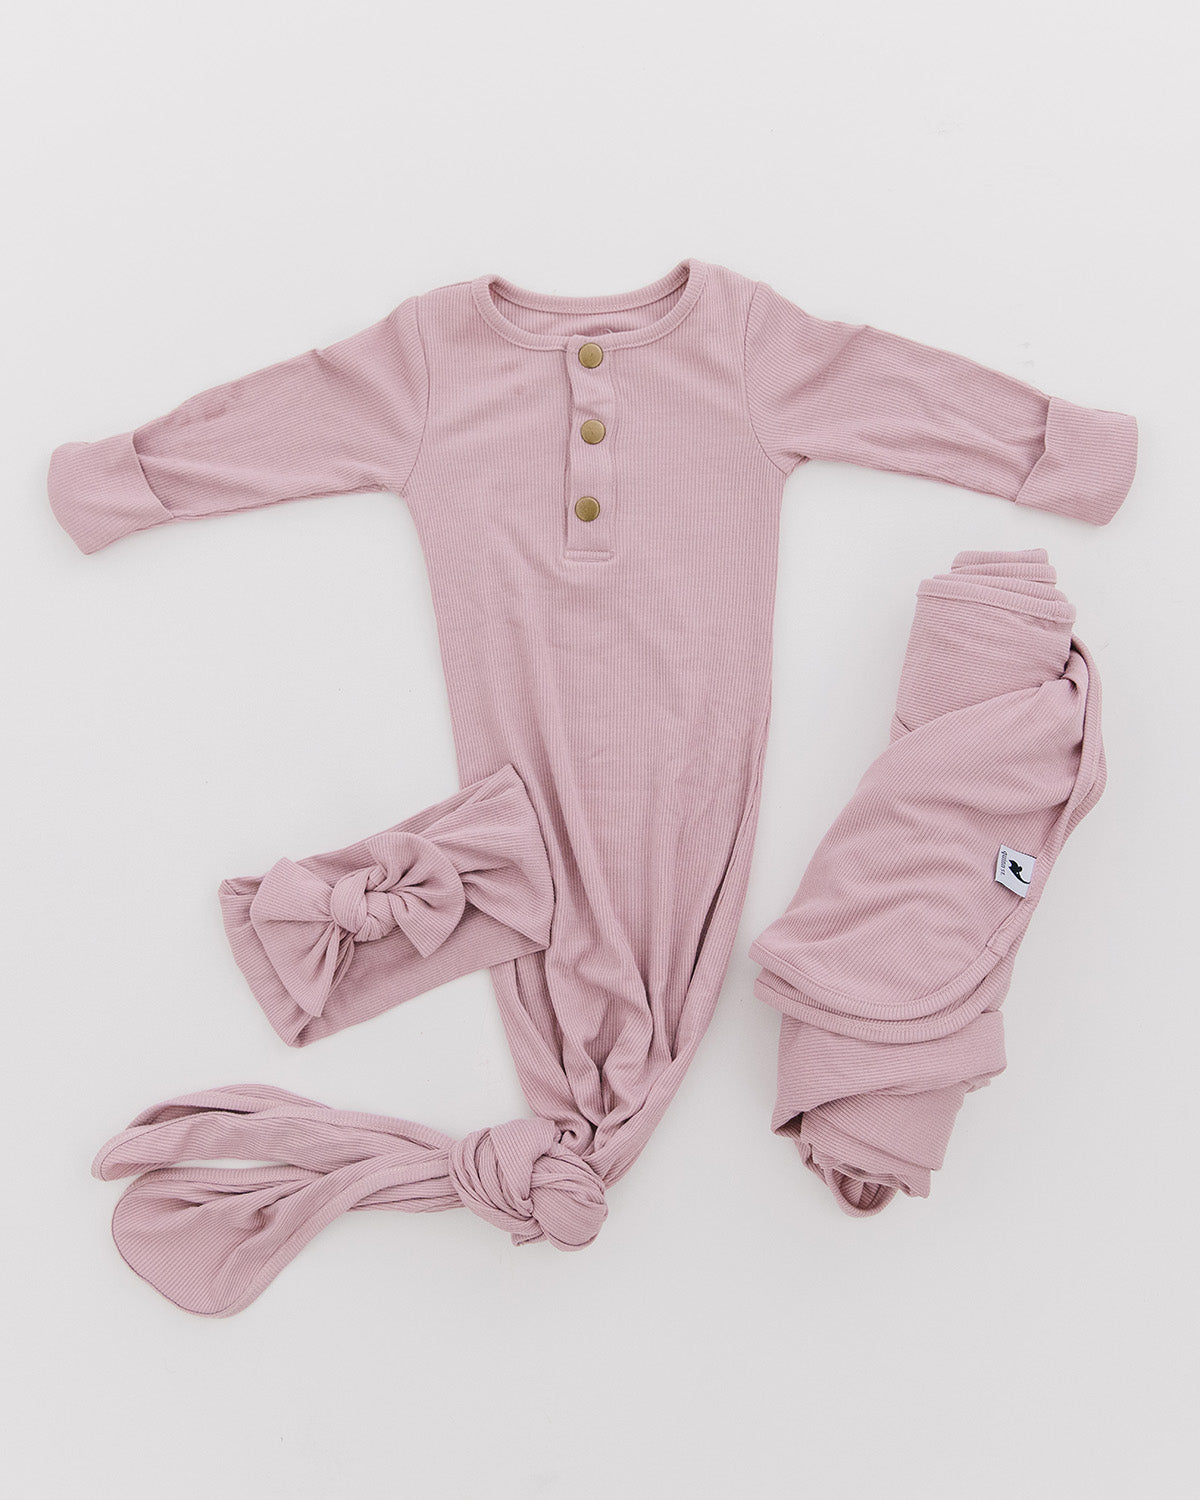 blush ribbed newborn outfit bundle